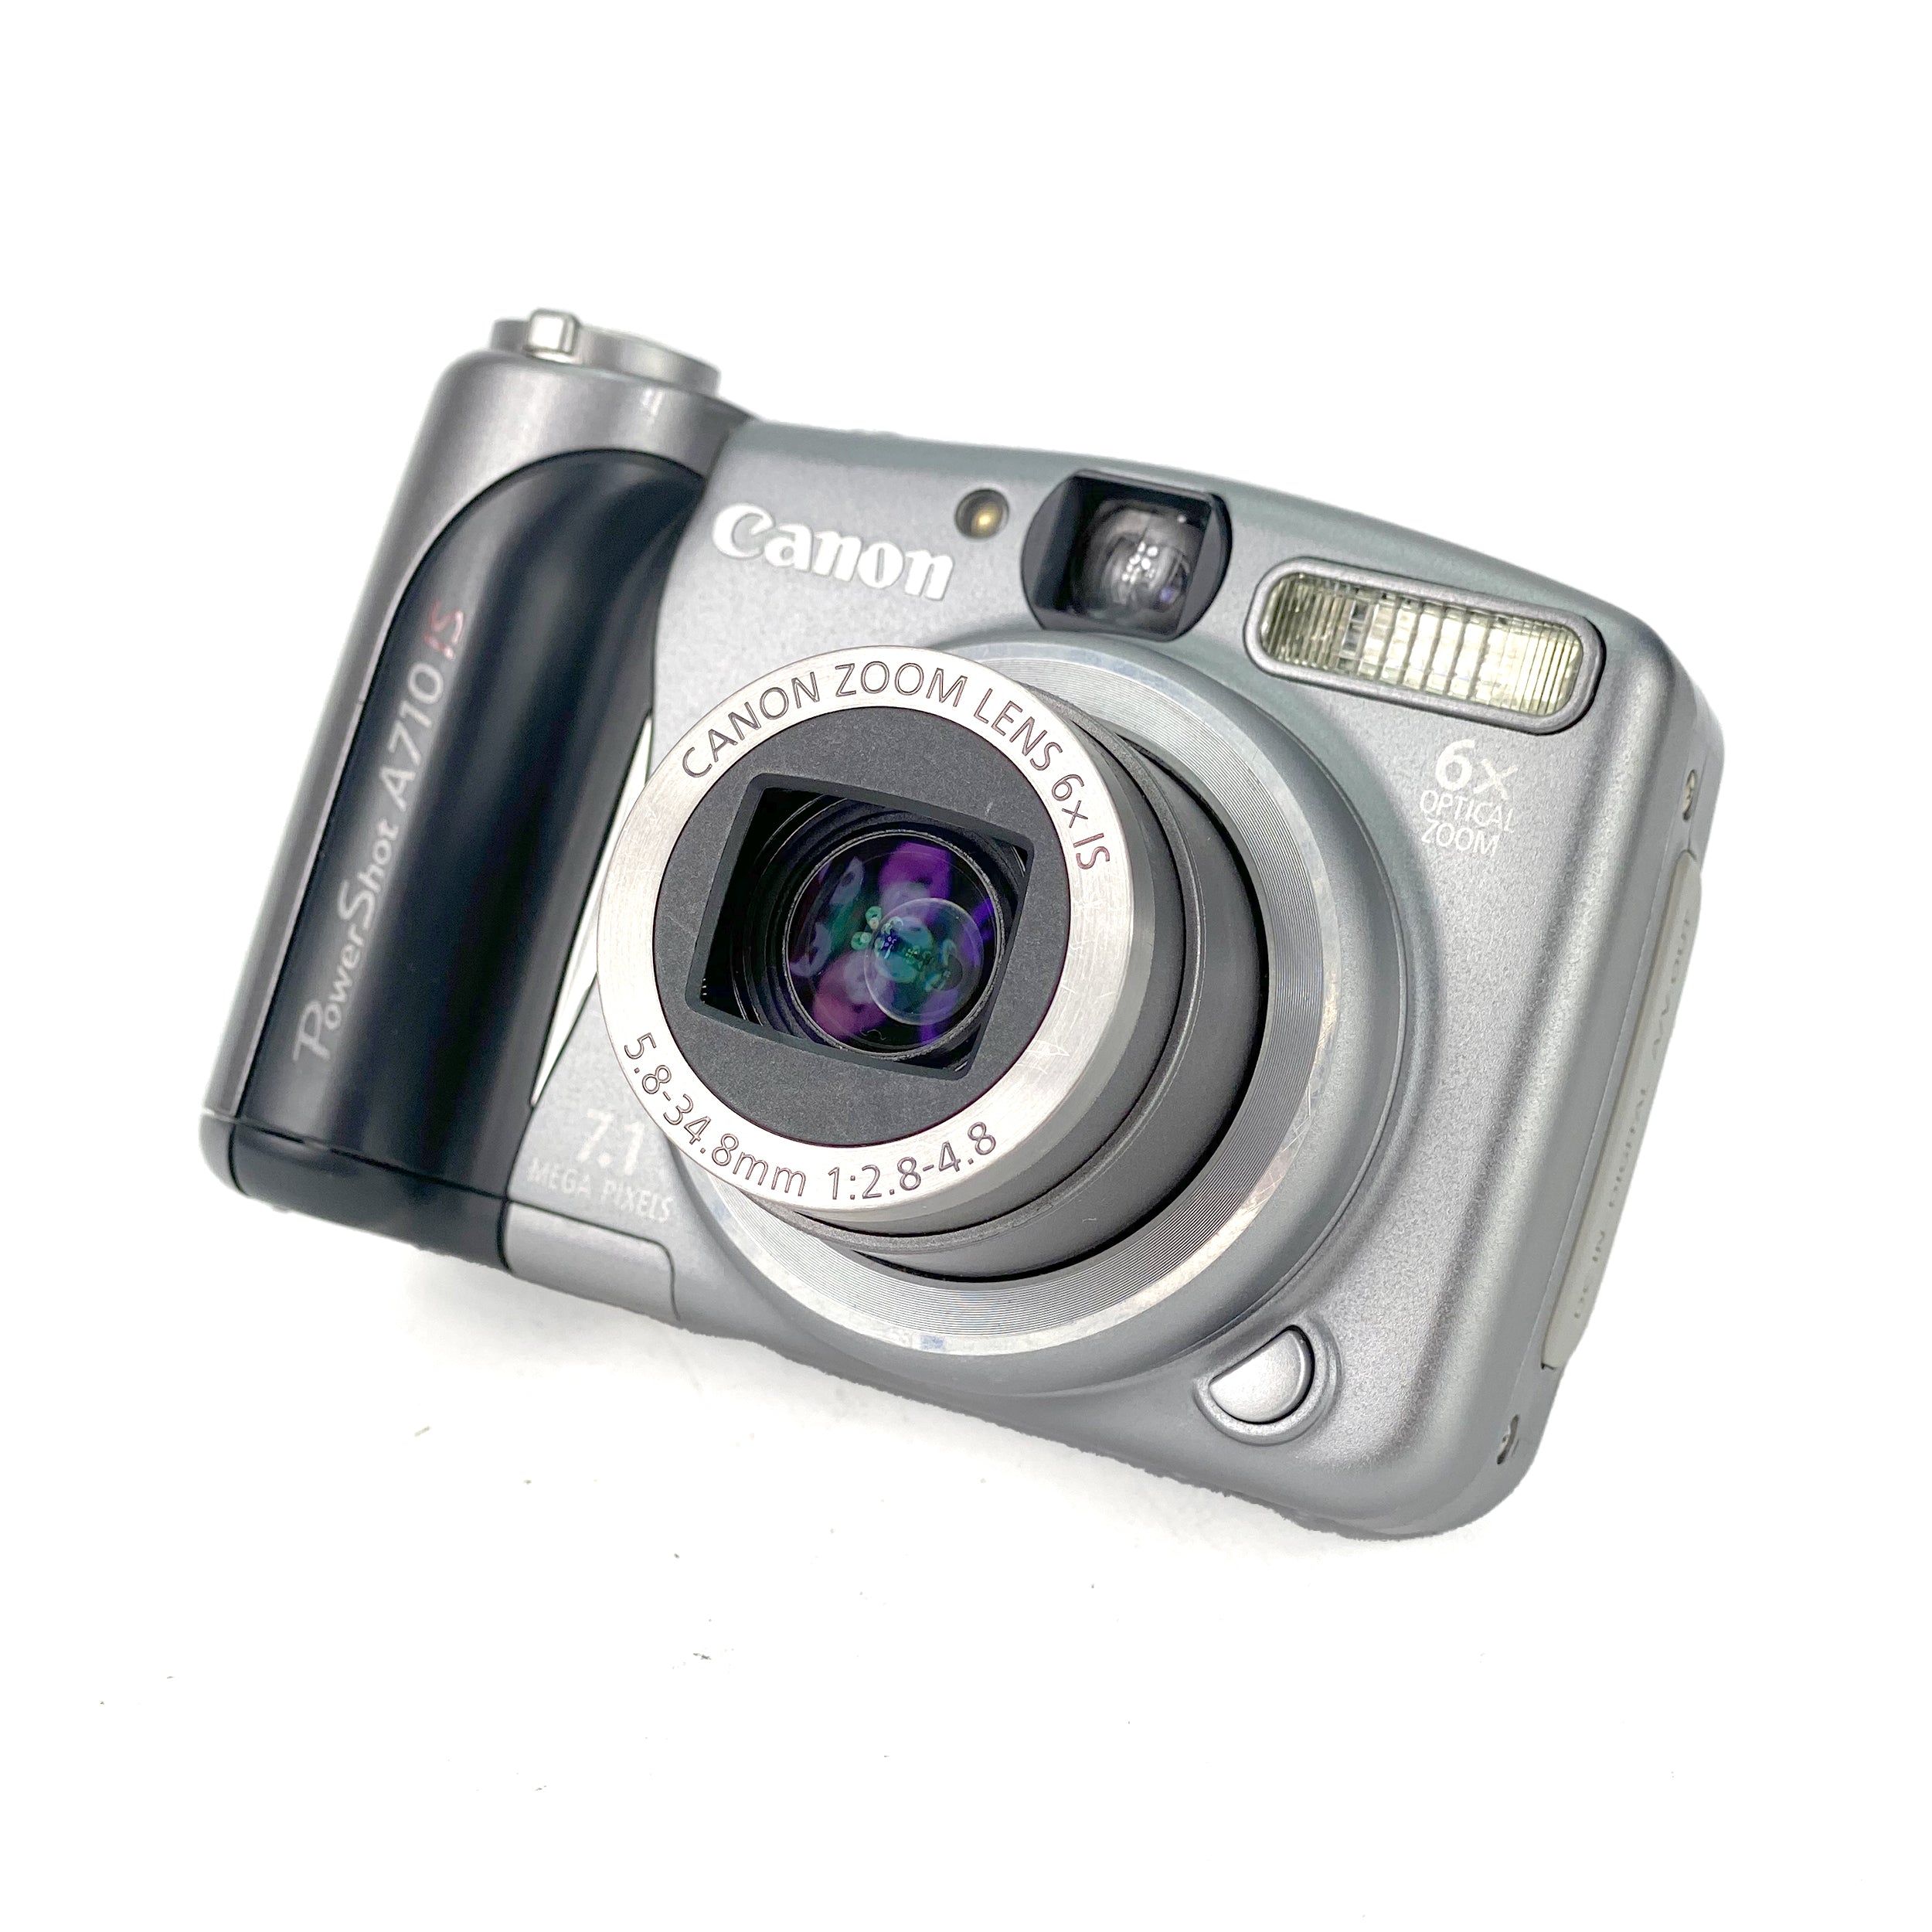 Canon PowerShot A710 Digital Compact